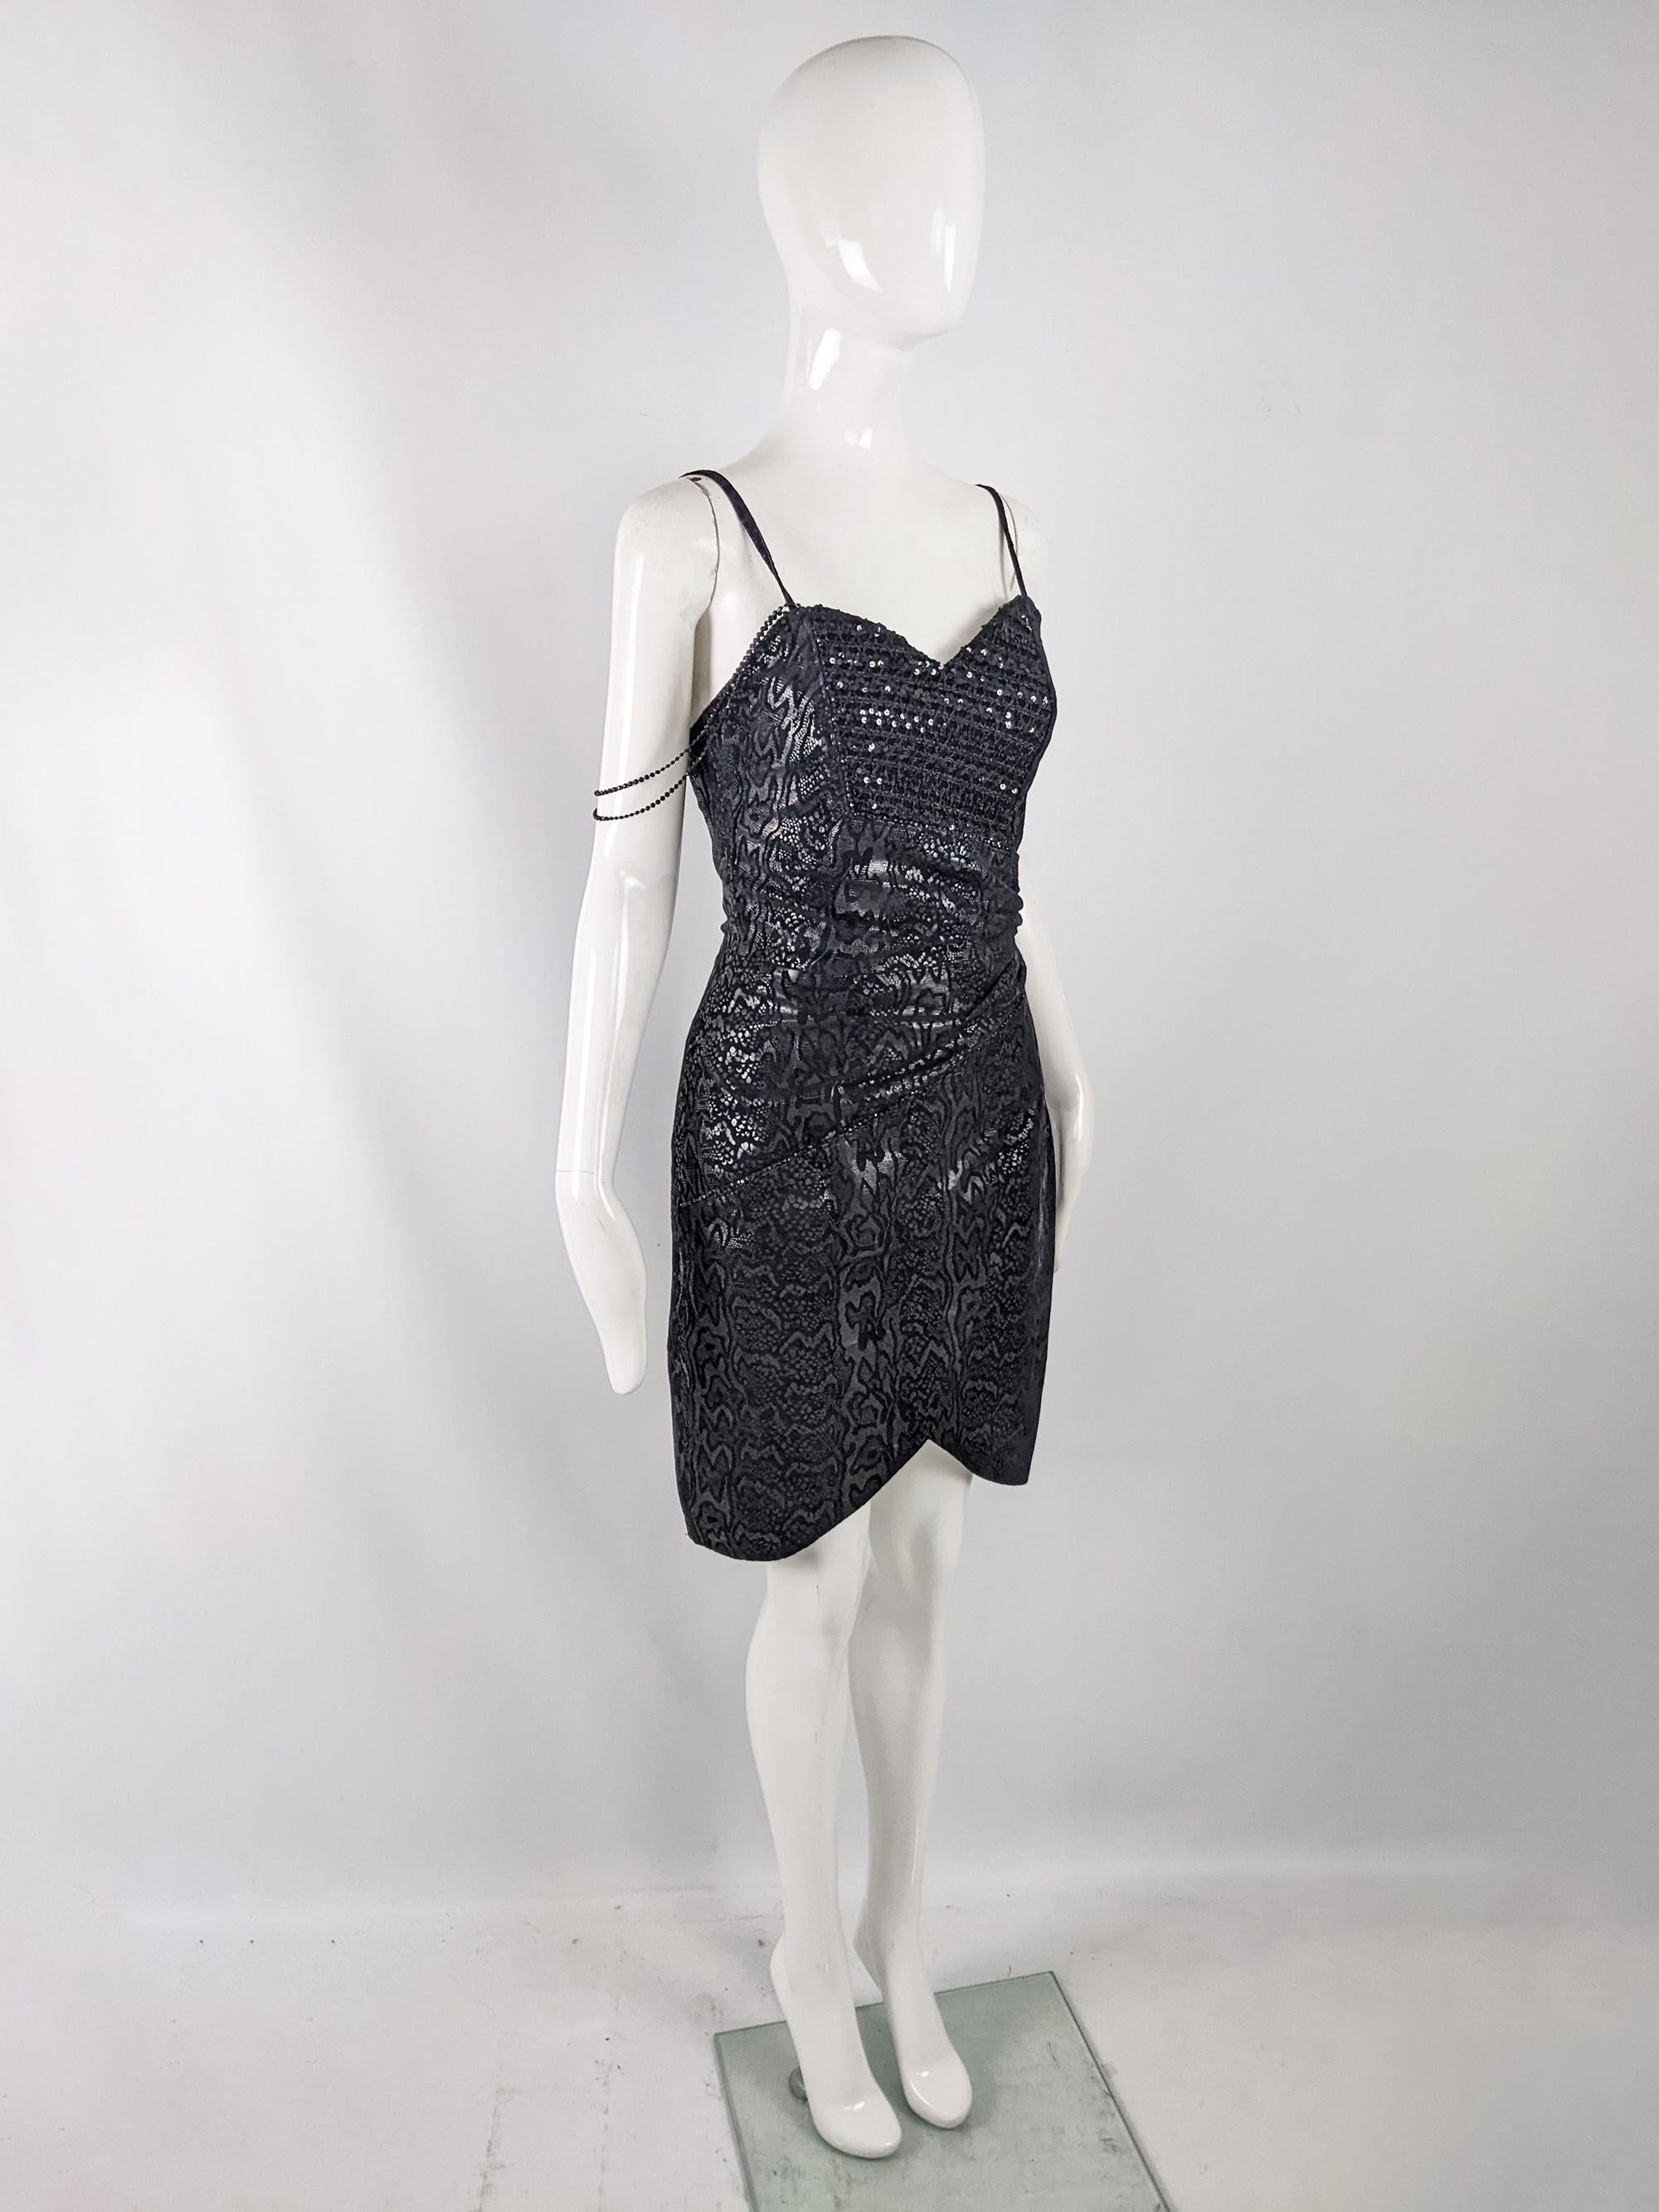 Jacques Sac Vintage Black Leather Snakeskin Print Sequin Real Leather Dress 2